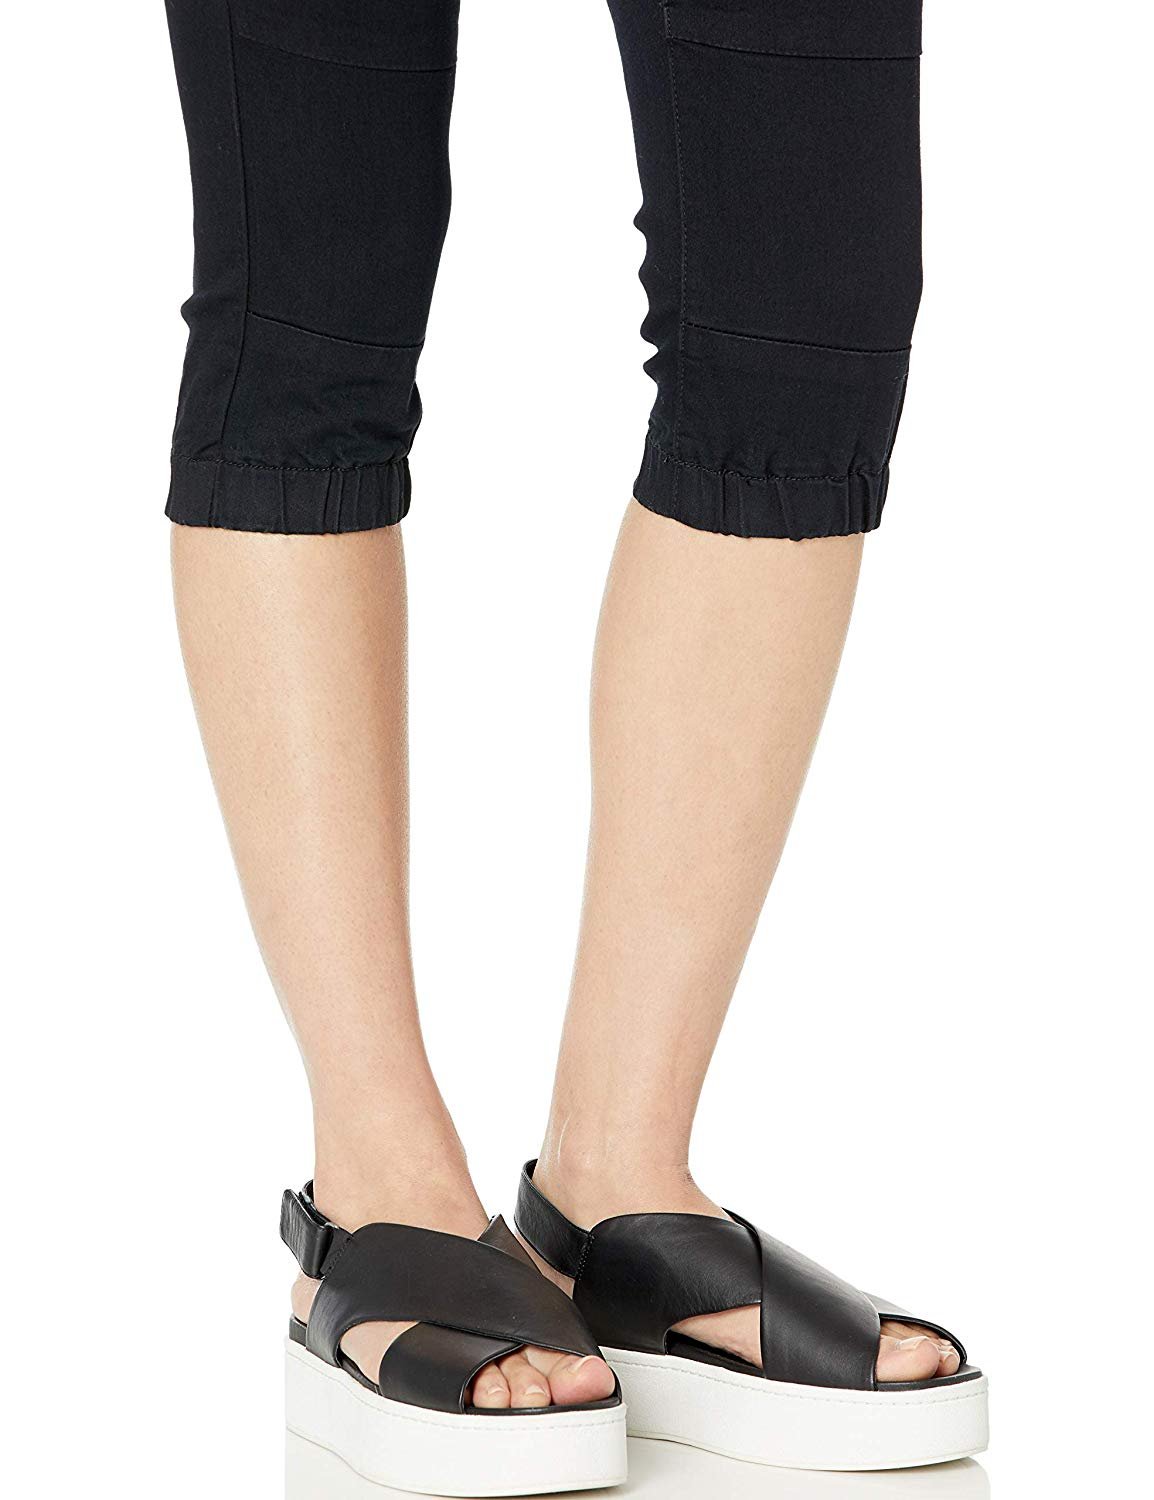 Cute Teen Girl Jeans Plus Size Capri Pants for Teen Girls in Black Denim Size 24W - image 2 of 4